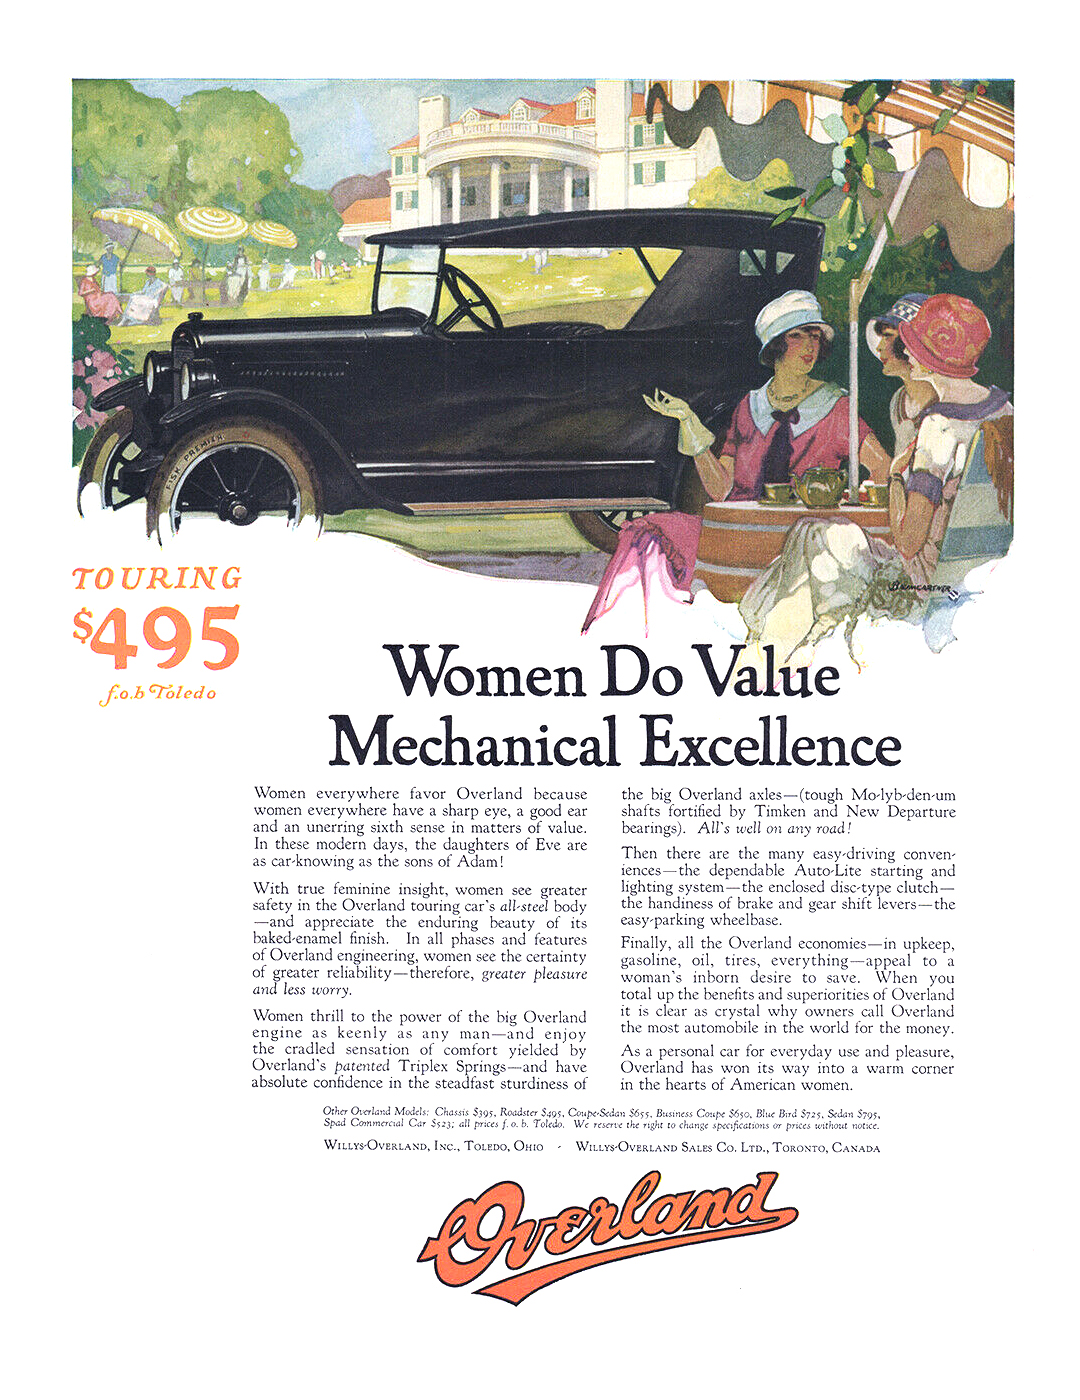 Overland Touring Ad (August, 1924) – Women Do Value Mechanical Excellence – Illustrated by Warren Baumgartner